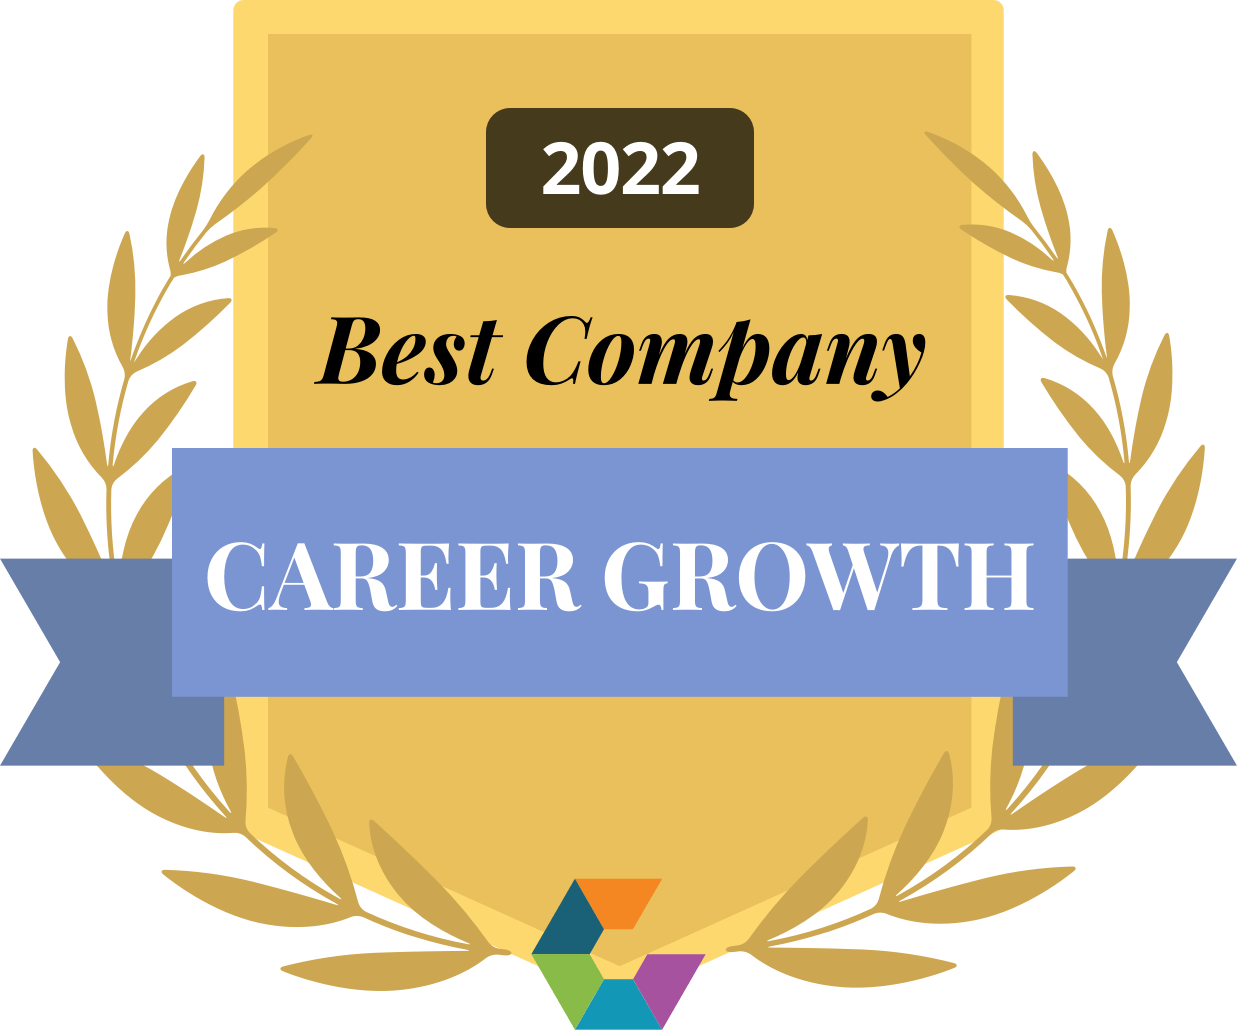 2022 Best Career Growth badge